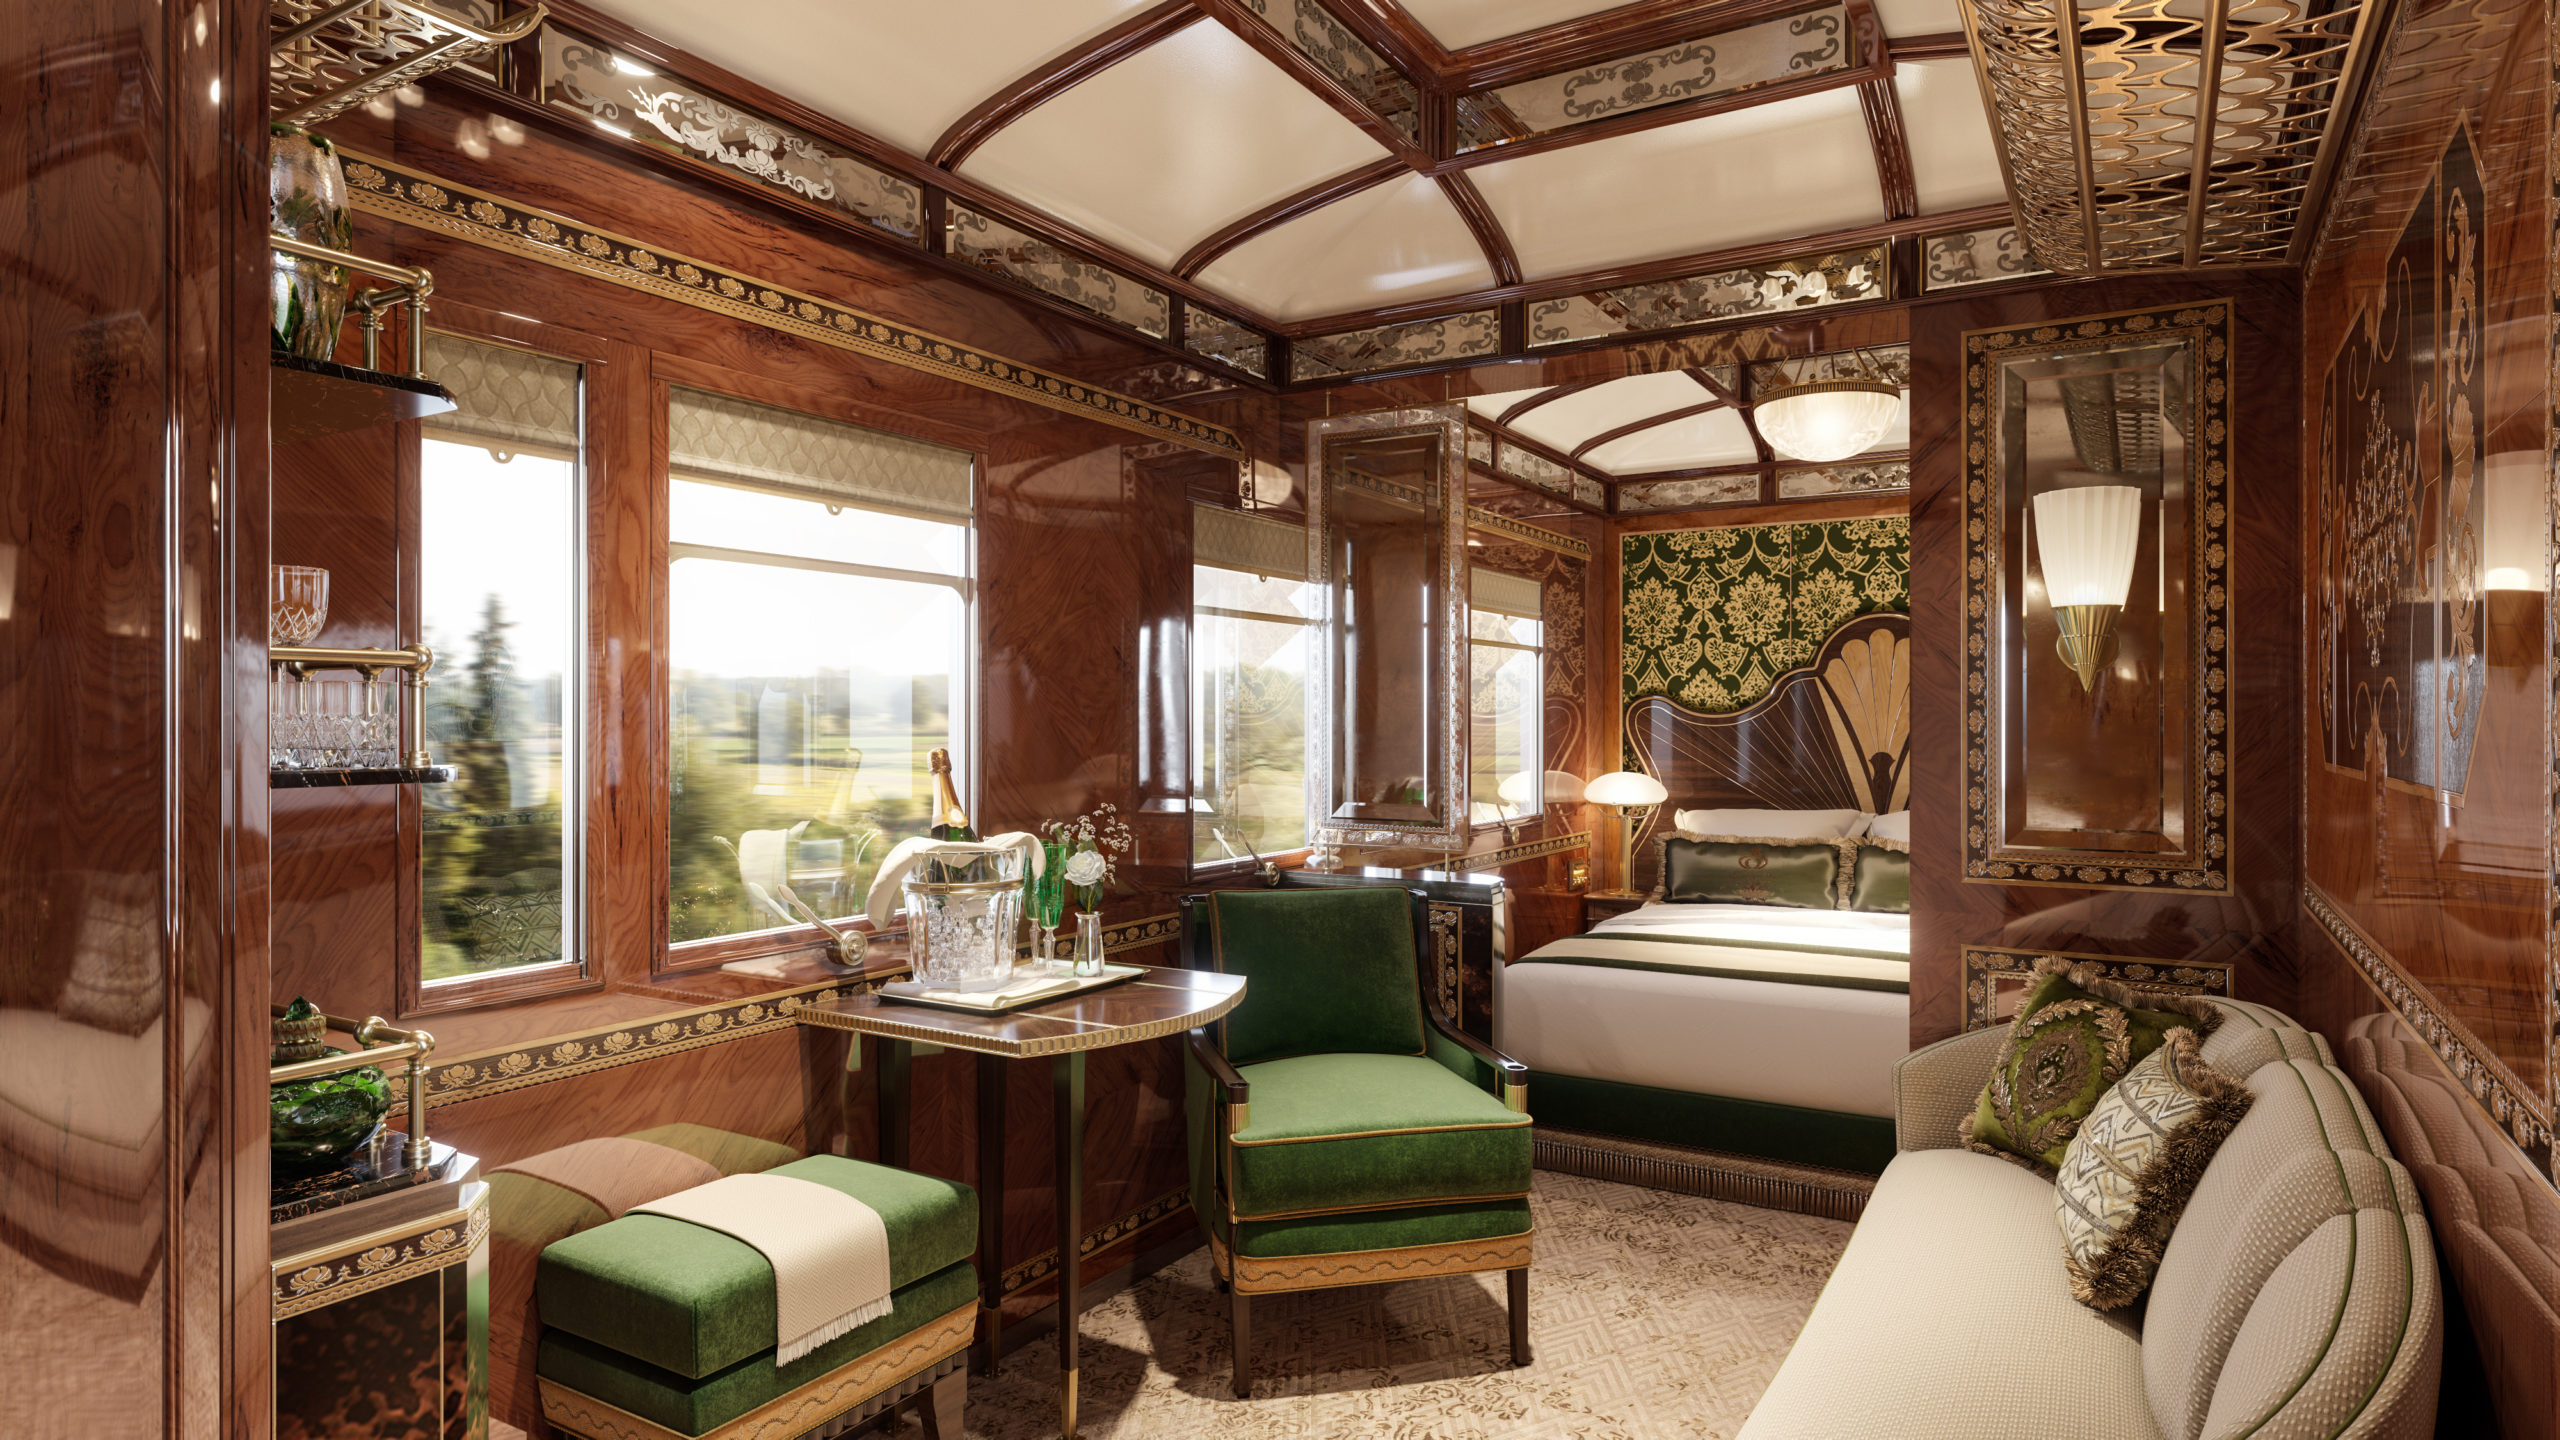 On board the legendary Venice Simplon-Orient-Express luxury train